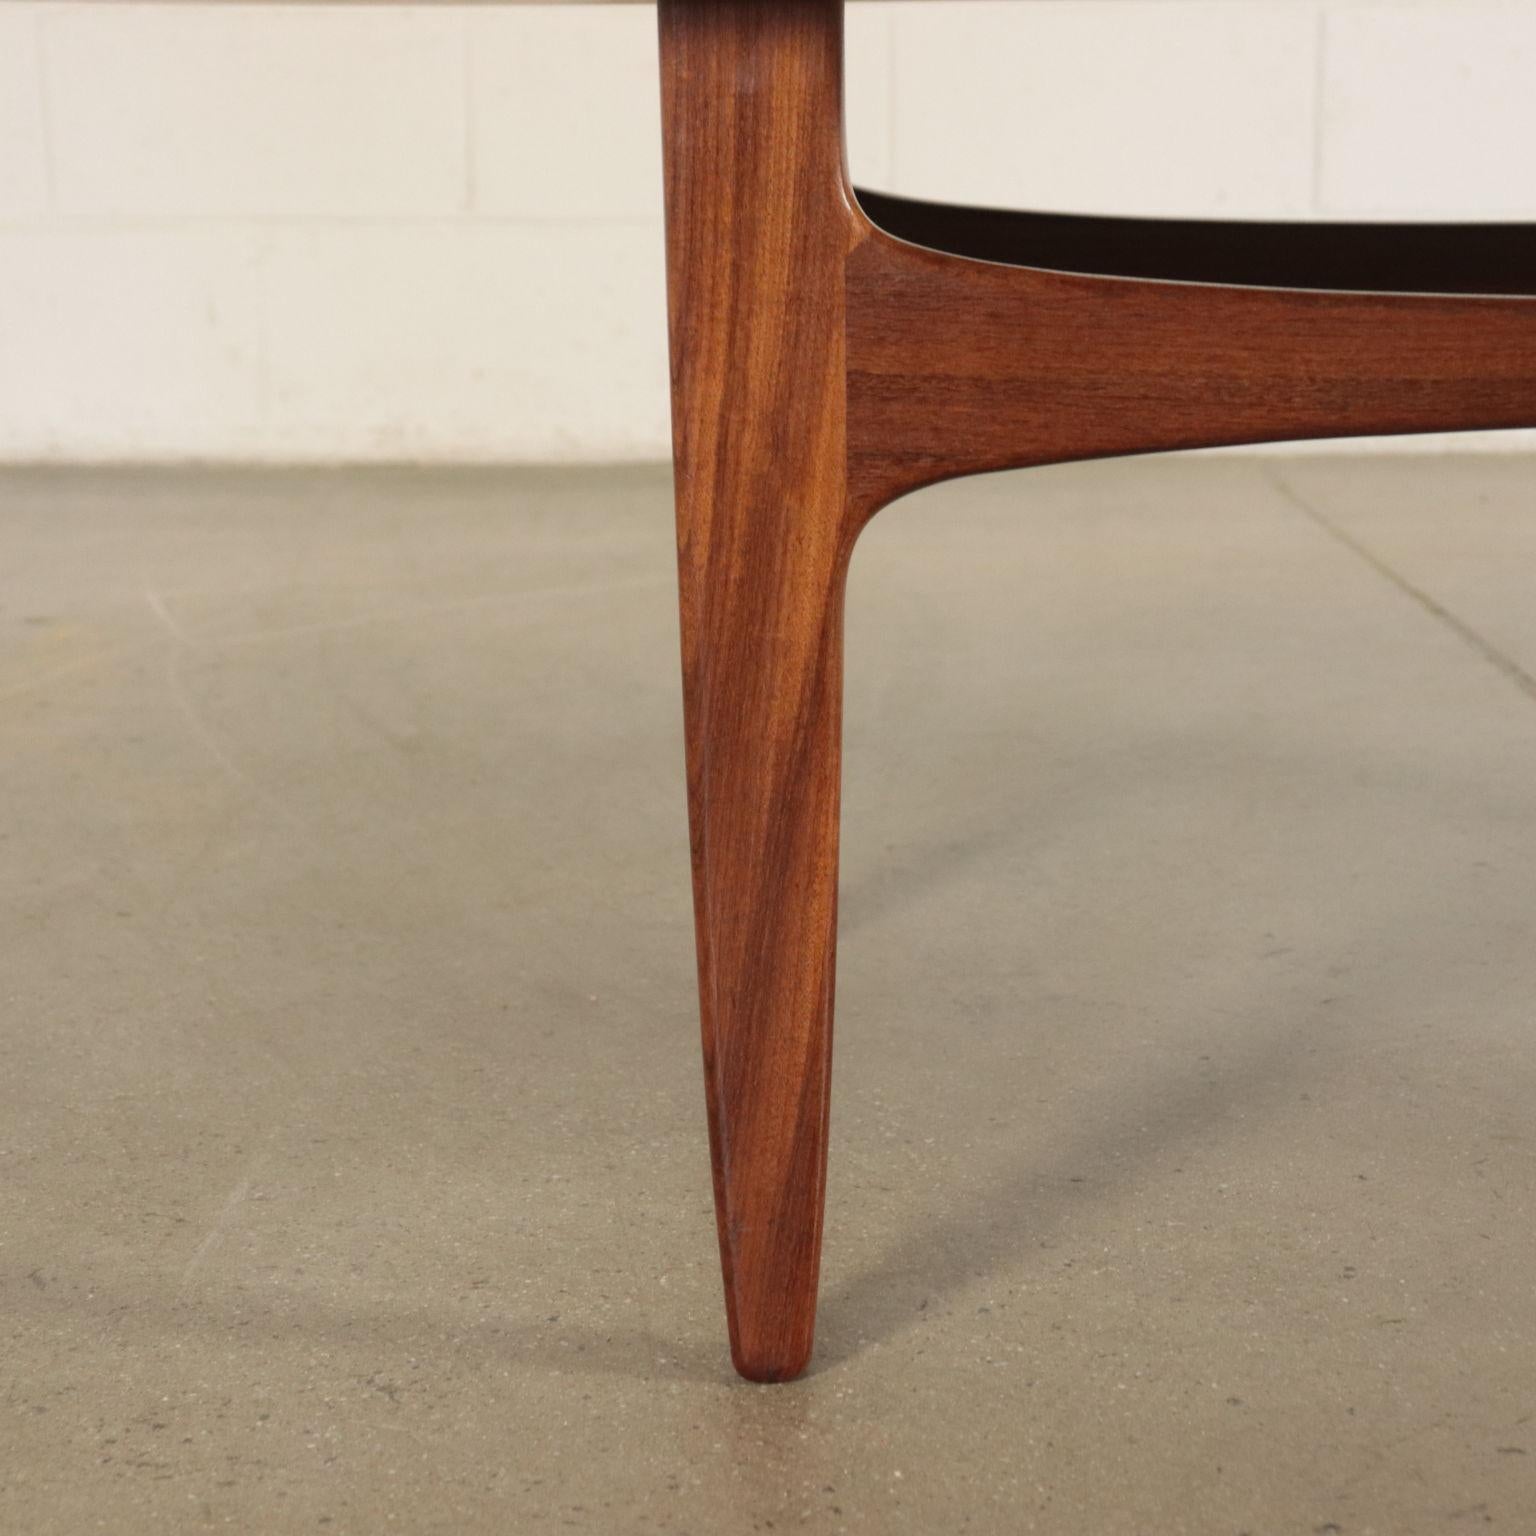 English Small Table Solid Wood and Teak Veneer 1960s G Plan Prodution